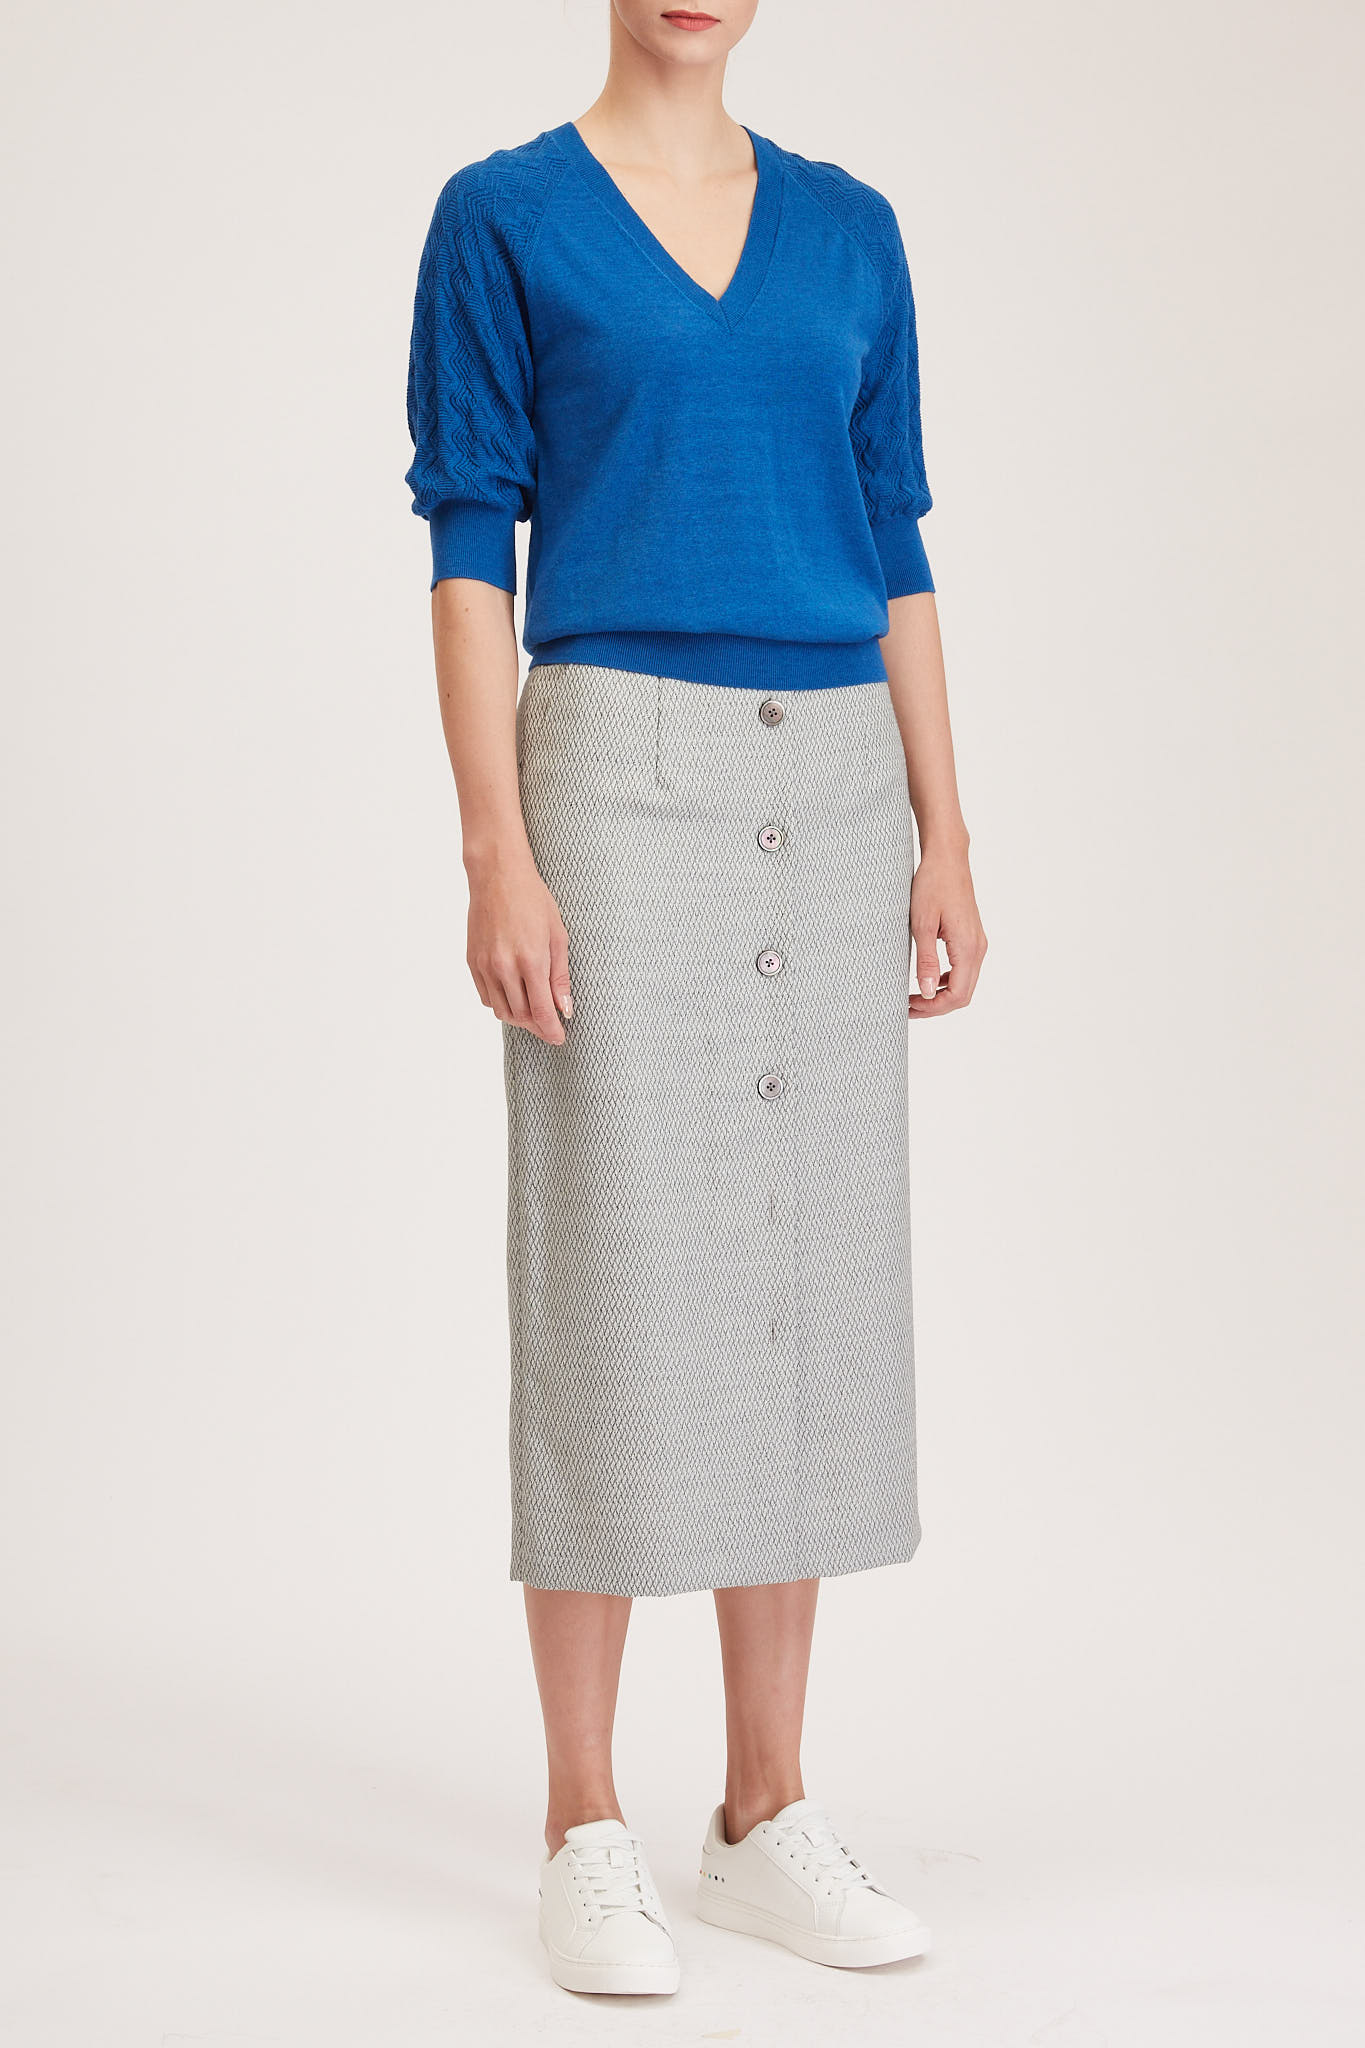 Whitby Knit T-Shirt – Plain knit,  V-neck t-shirt in royal blue0